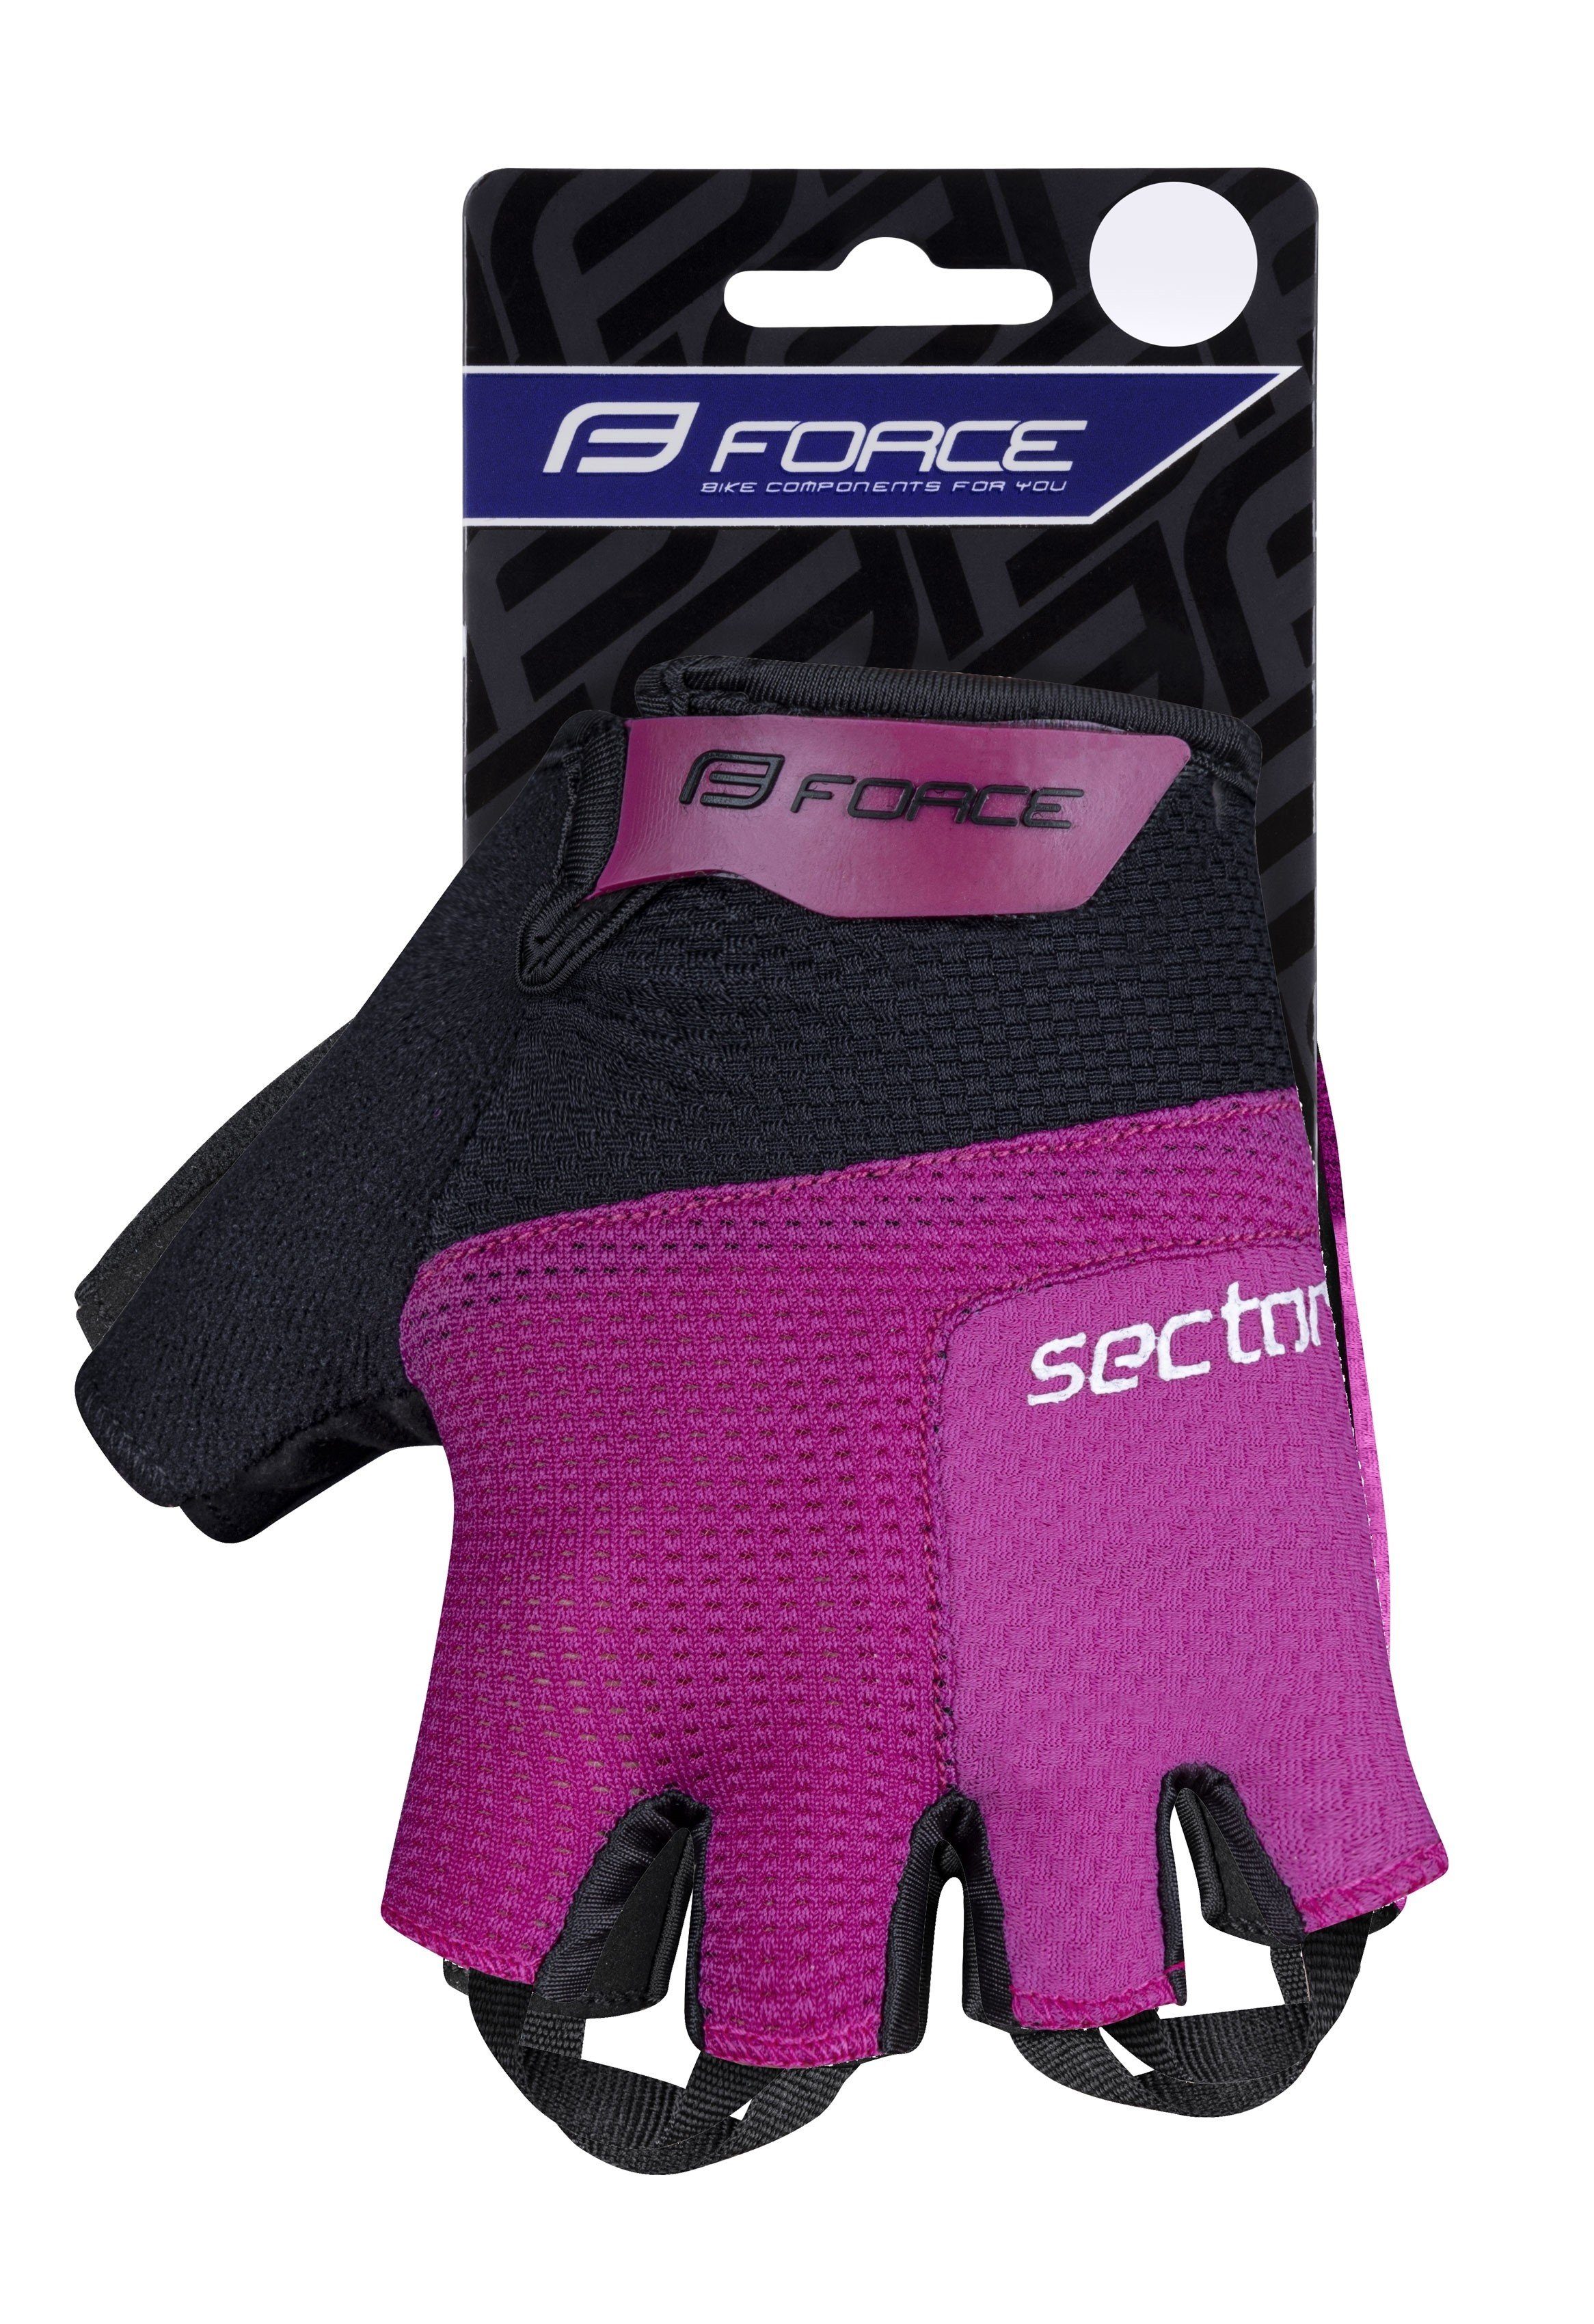 SECTOR Fahrradhandschuhe FORCE LADY Handschuhe FORCE pink-schwarz